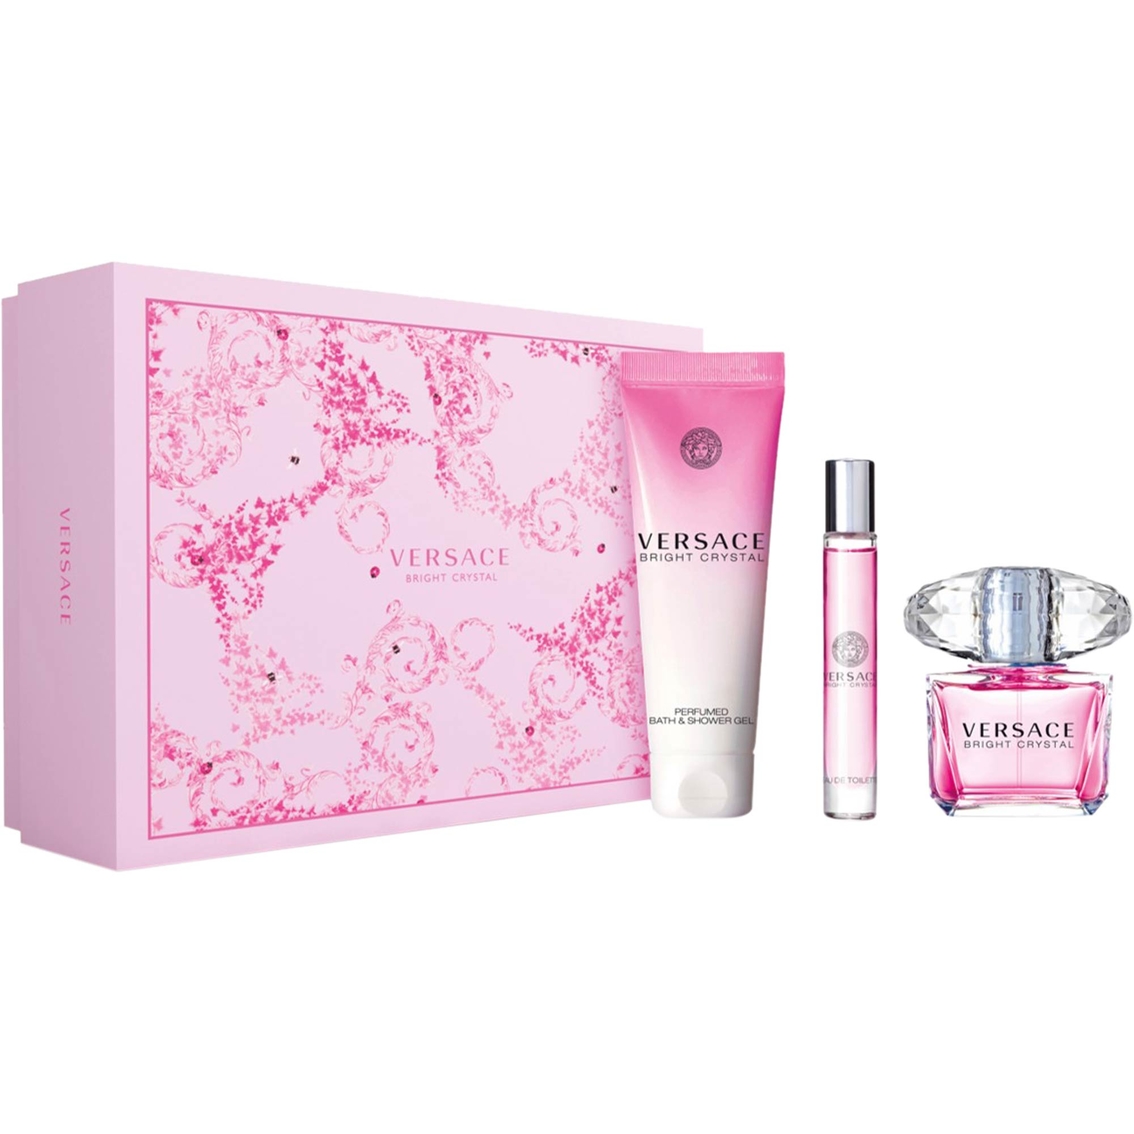 versace perfume bright crystal gift set